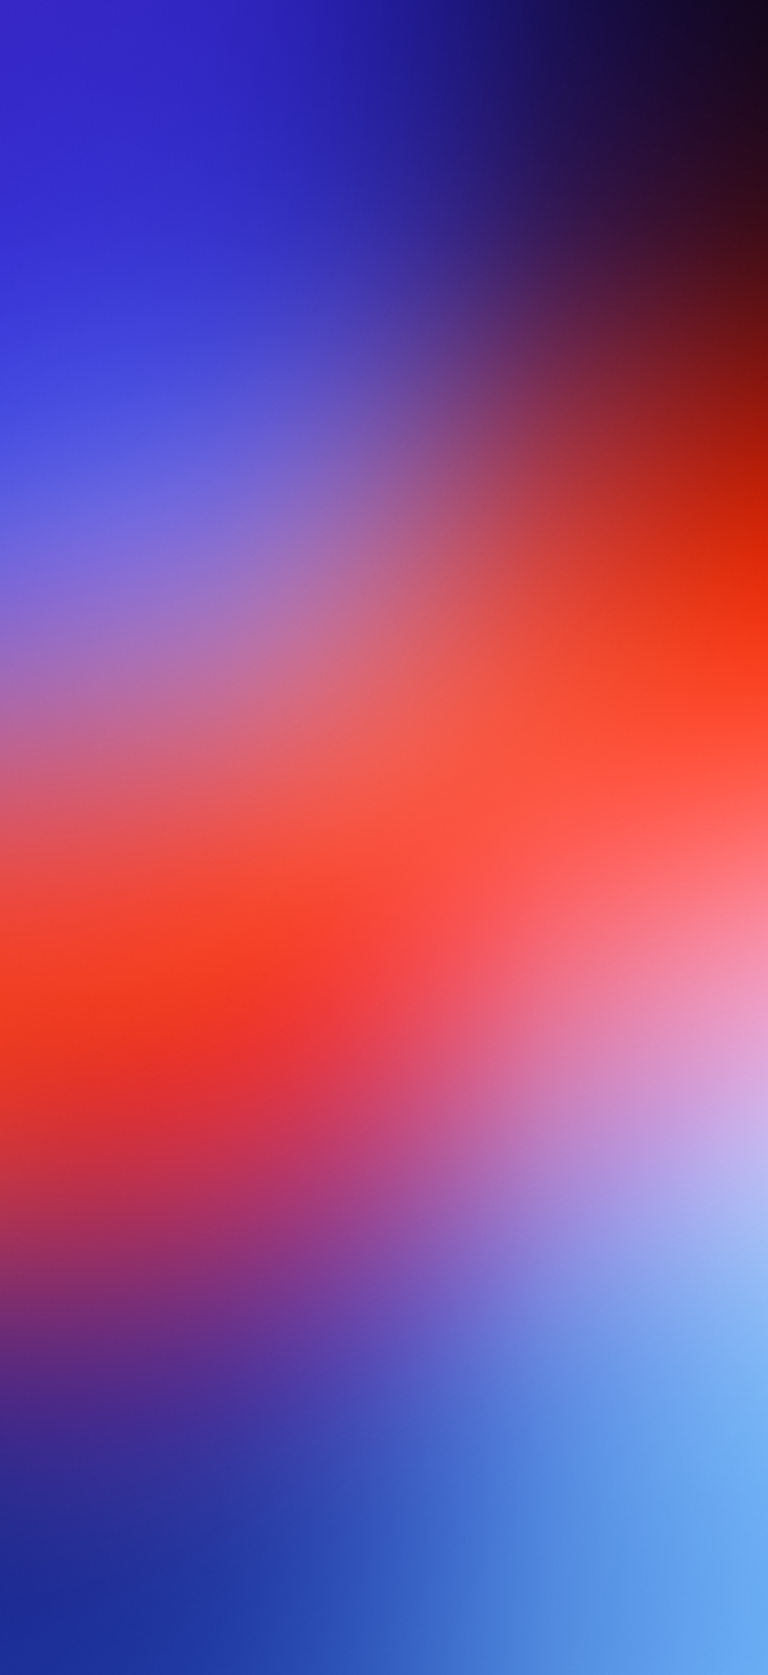 blue to red to blue gradient by evgeniyzemelko | Zollotech